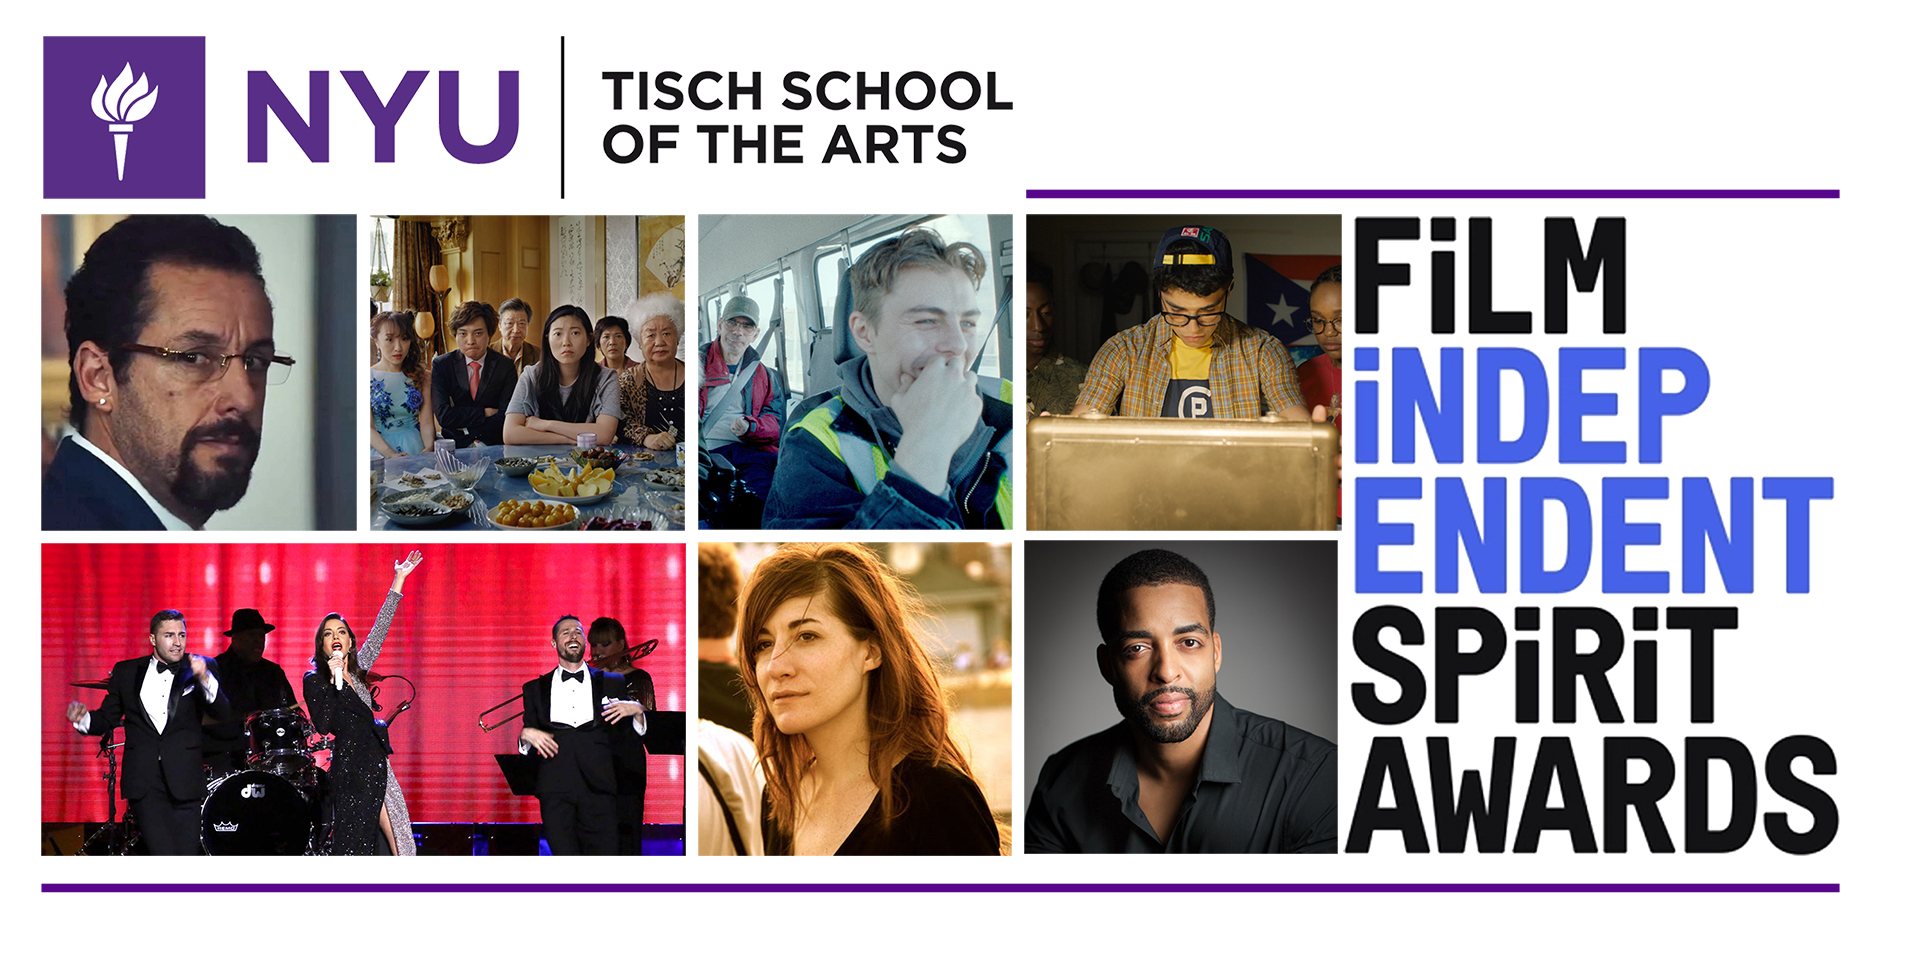 NYU Tisch Alumni IFC Award Winners | Images courtesy of Film Independent Spirit Awards